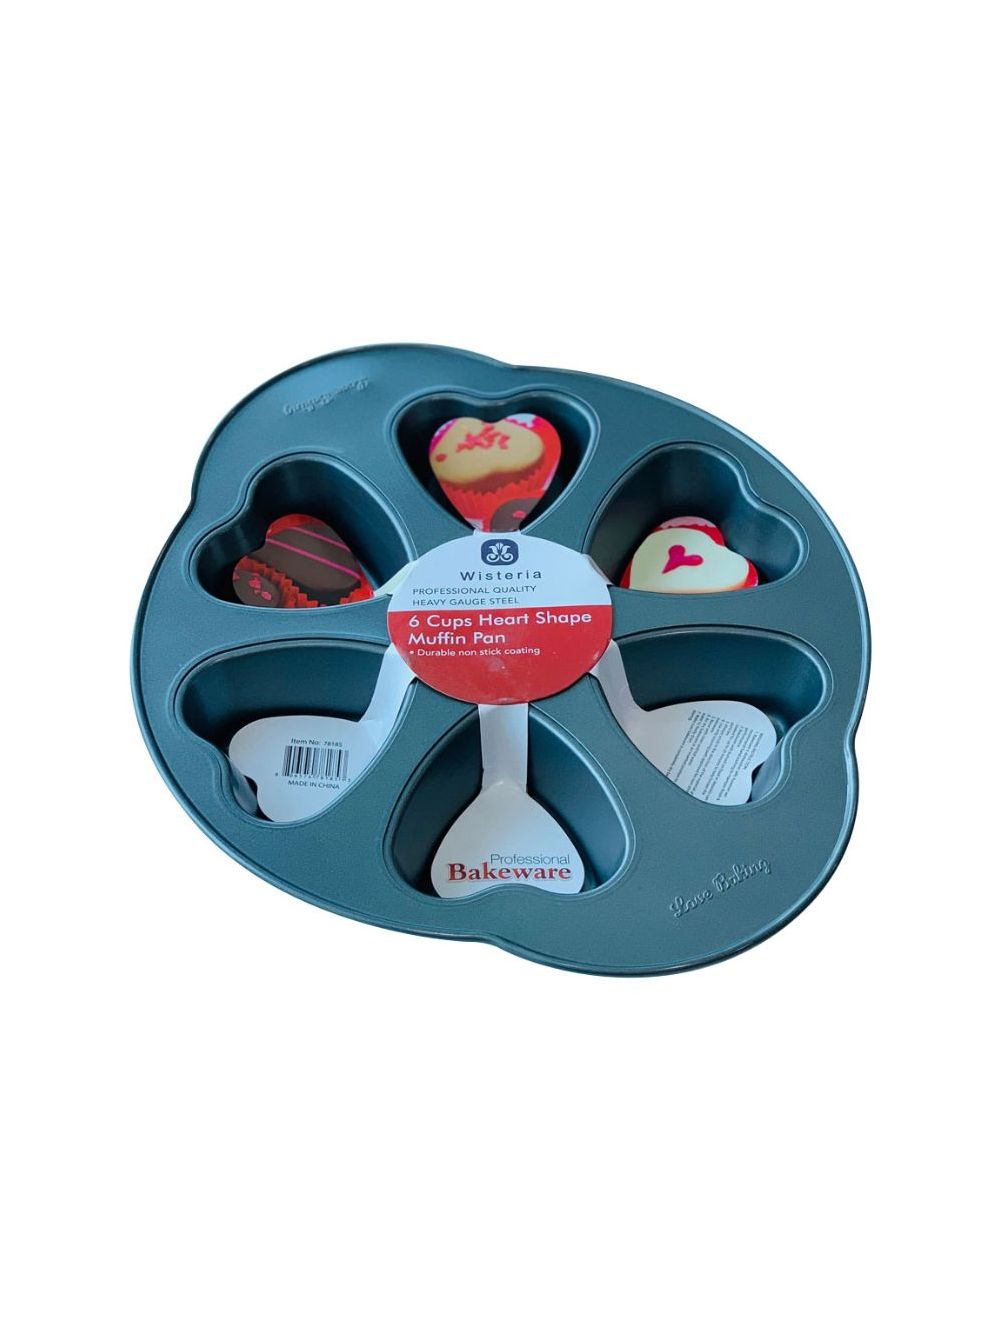 Wisteria N/S (40c) 6 Cups Heart Shape Muffin Pan-6 Cups Heart Shape Muffin Pan